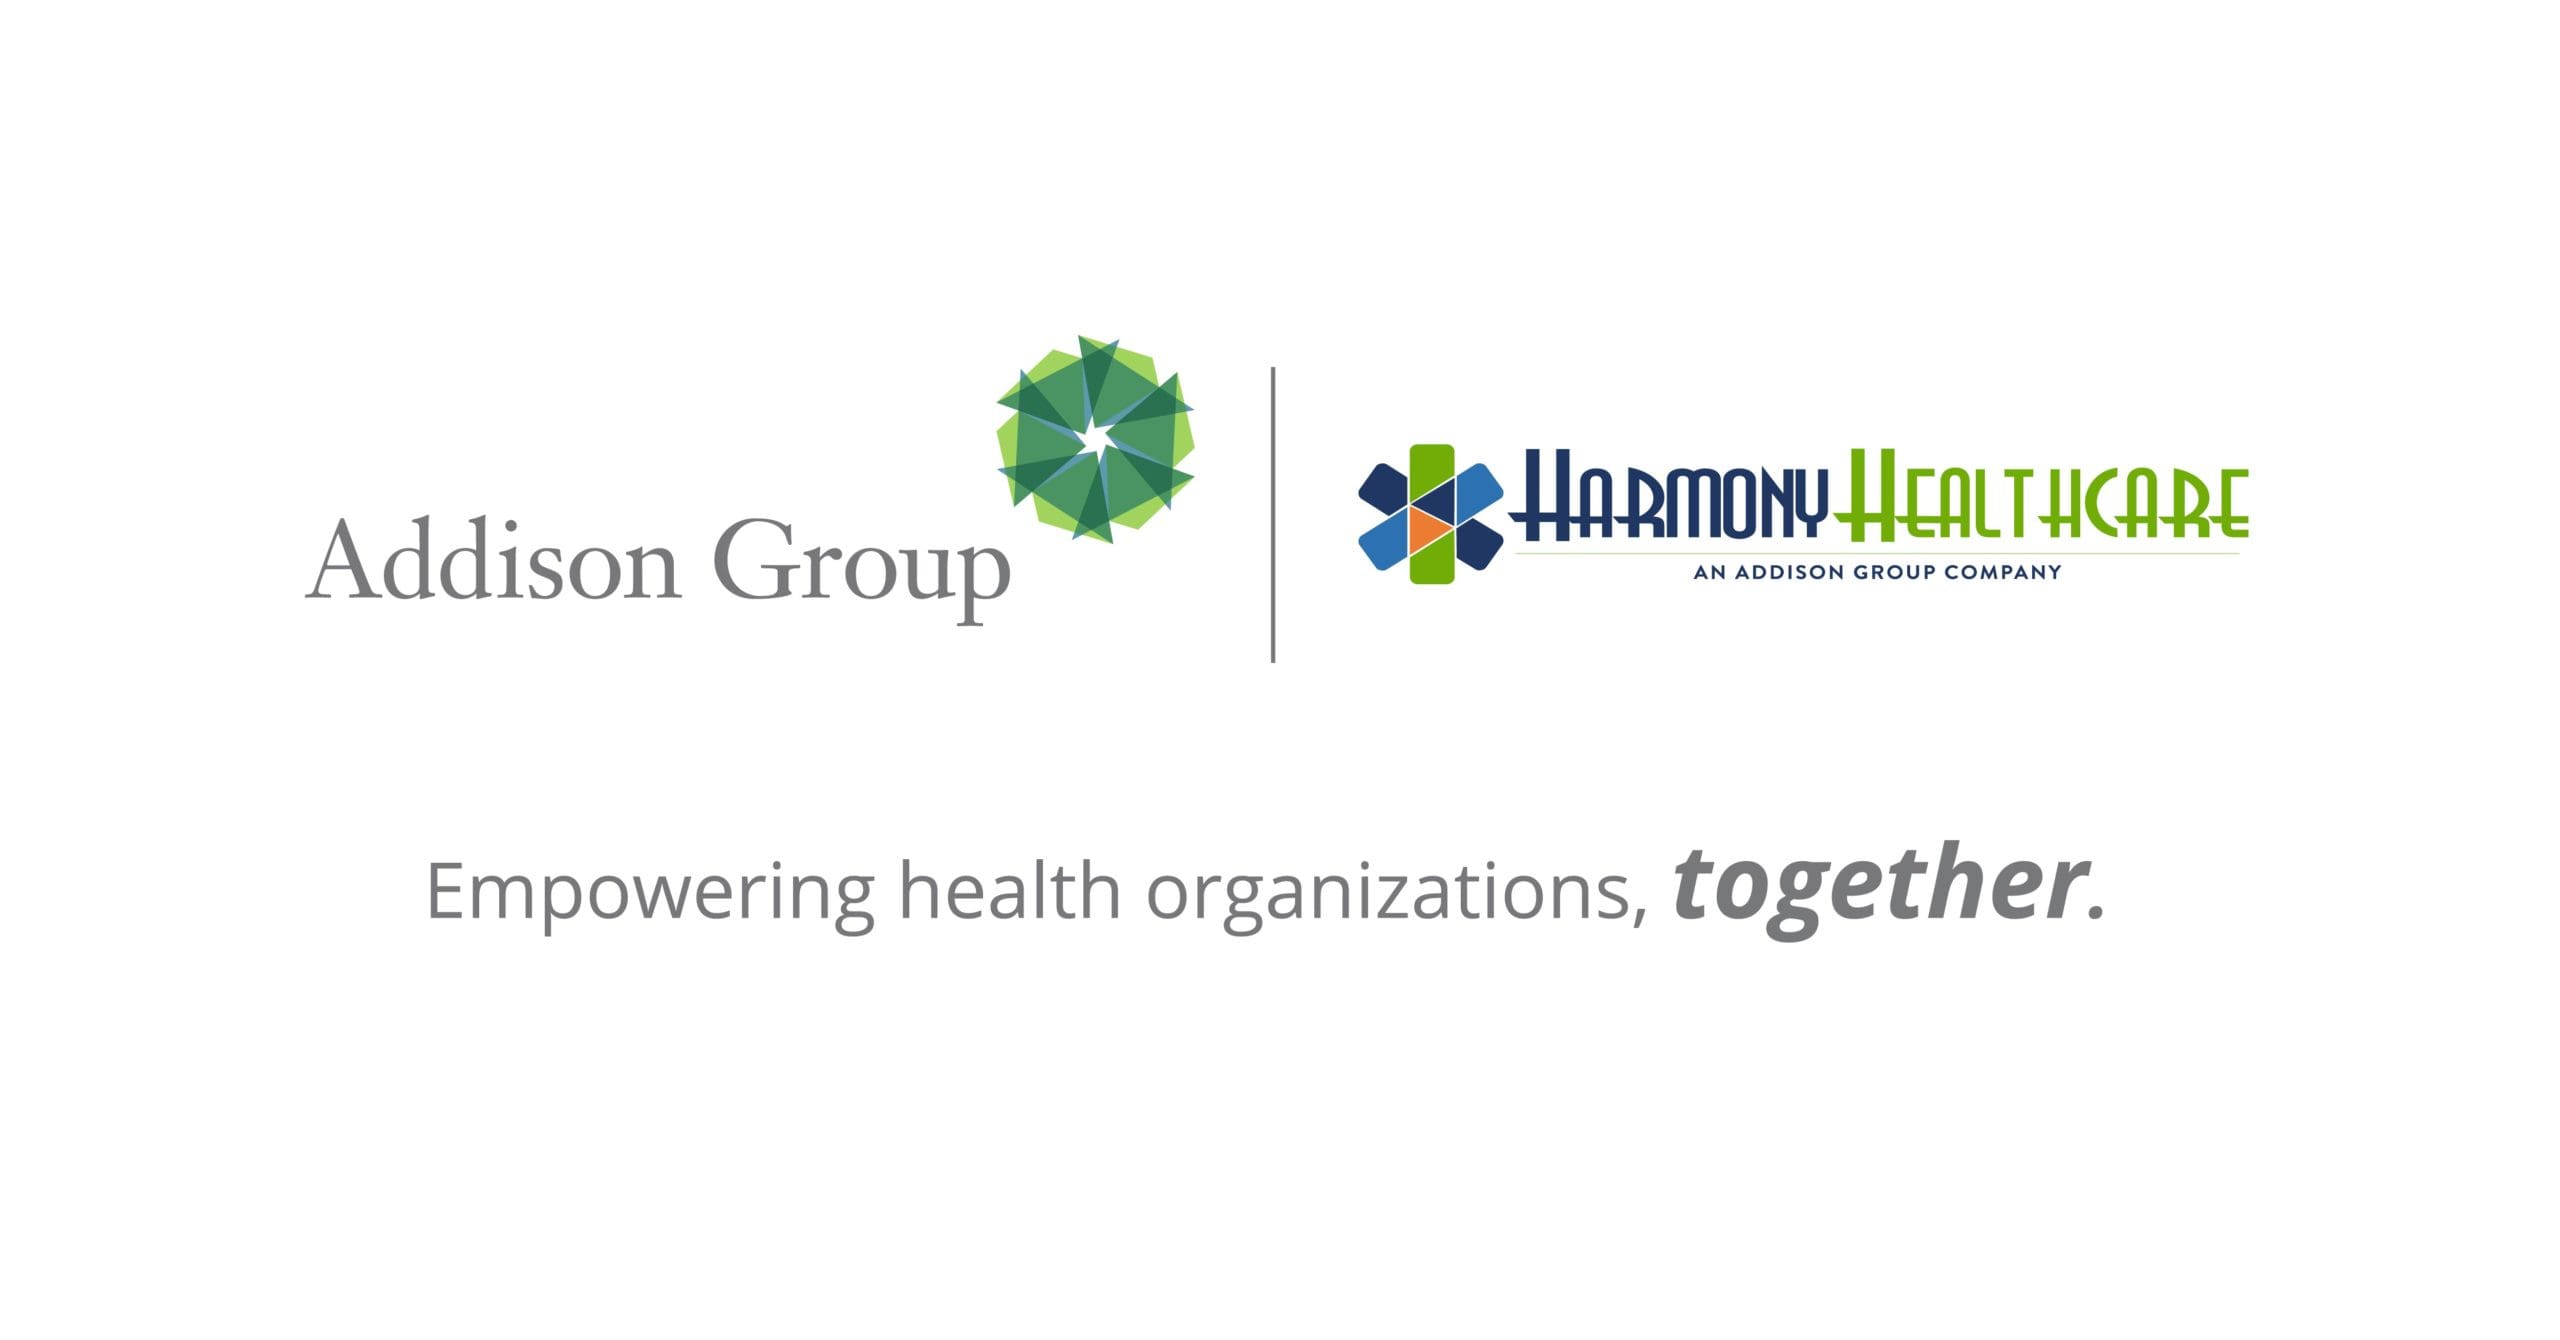 Addison Group logo next to Harmony Healthcare logo